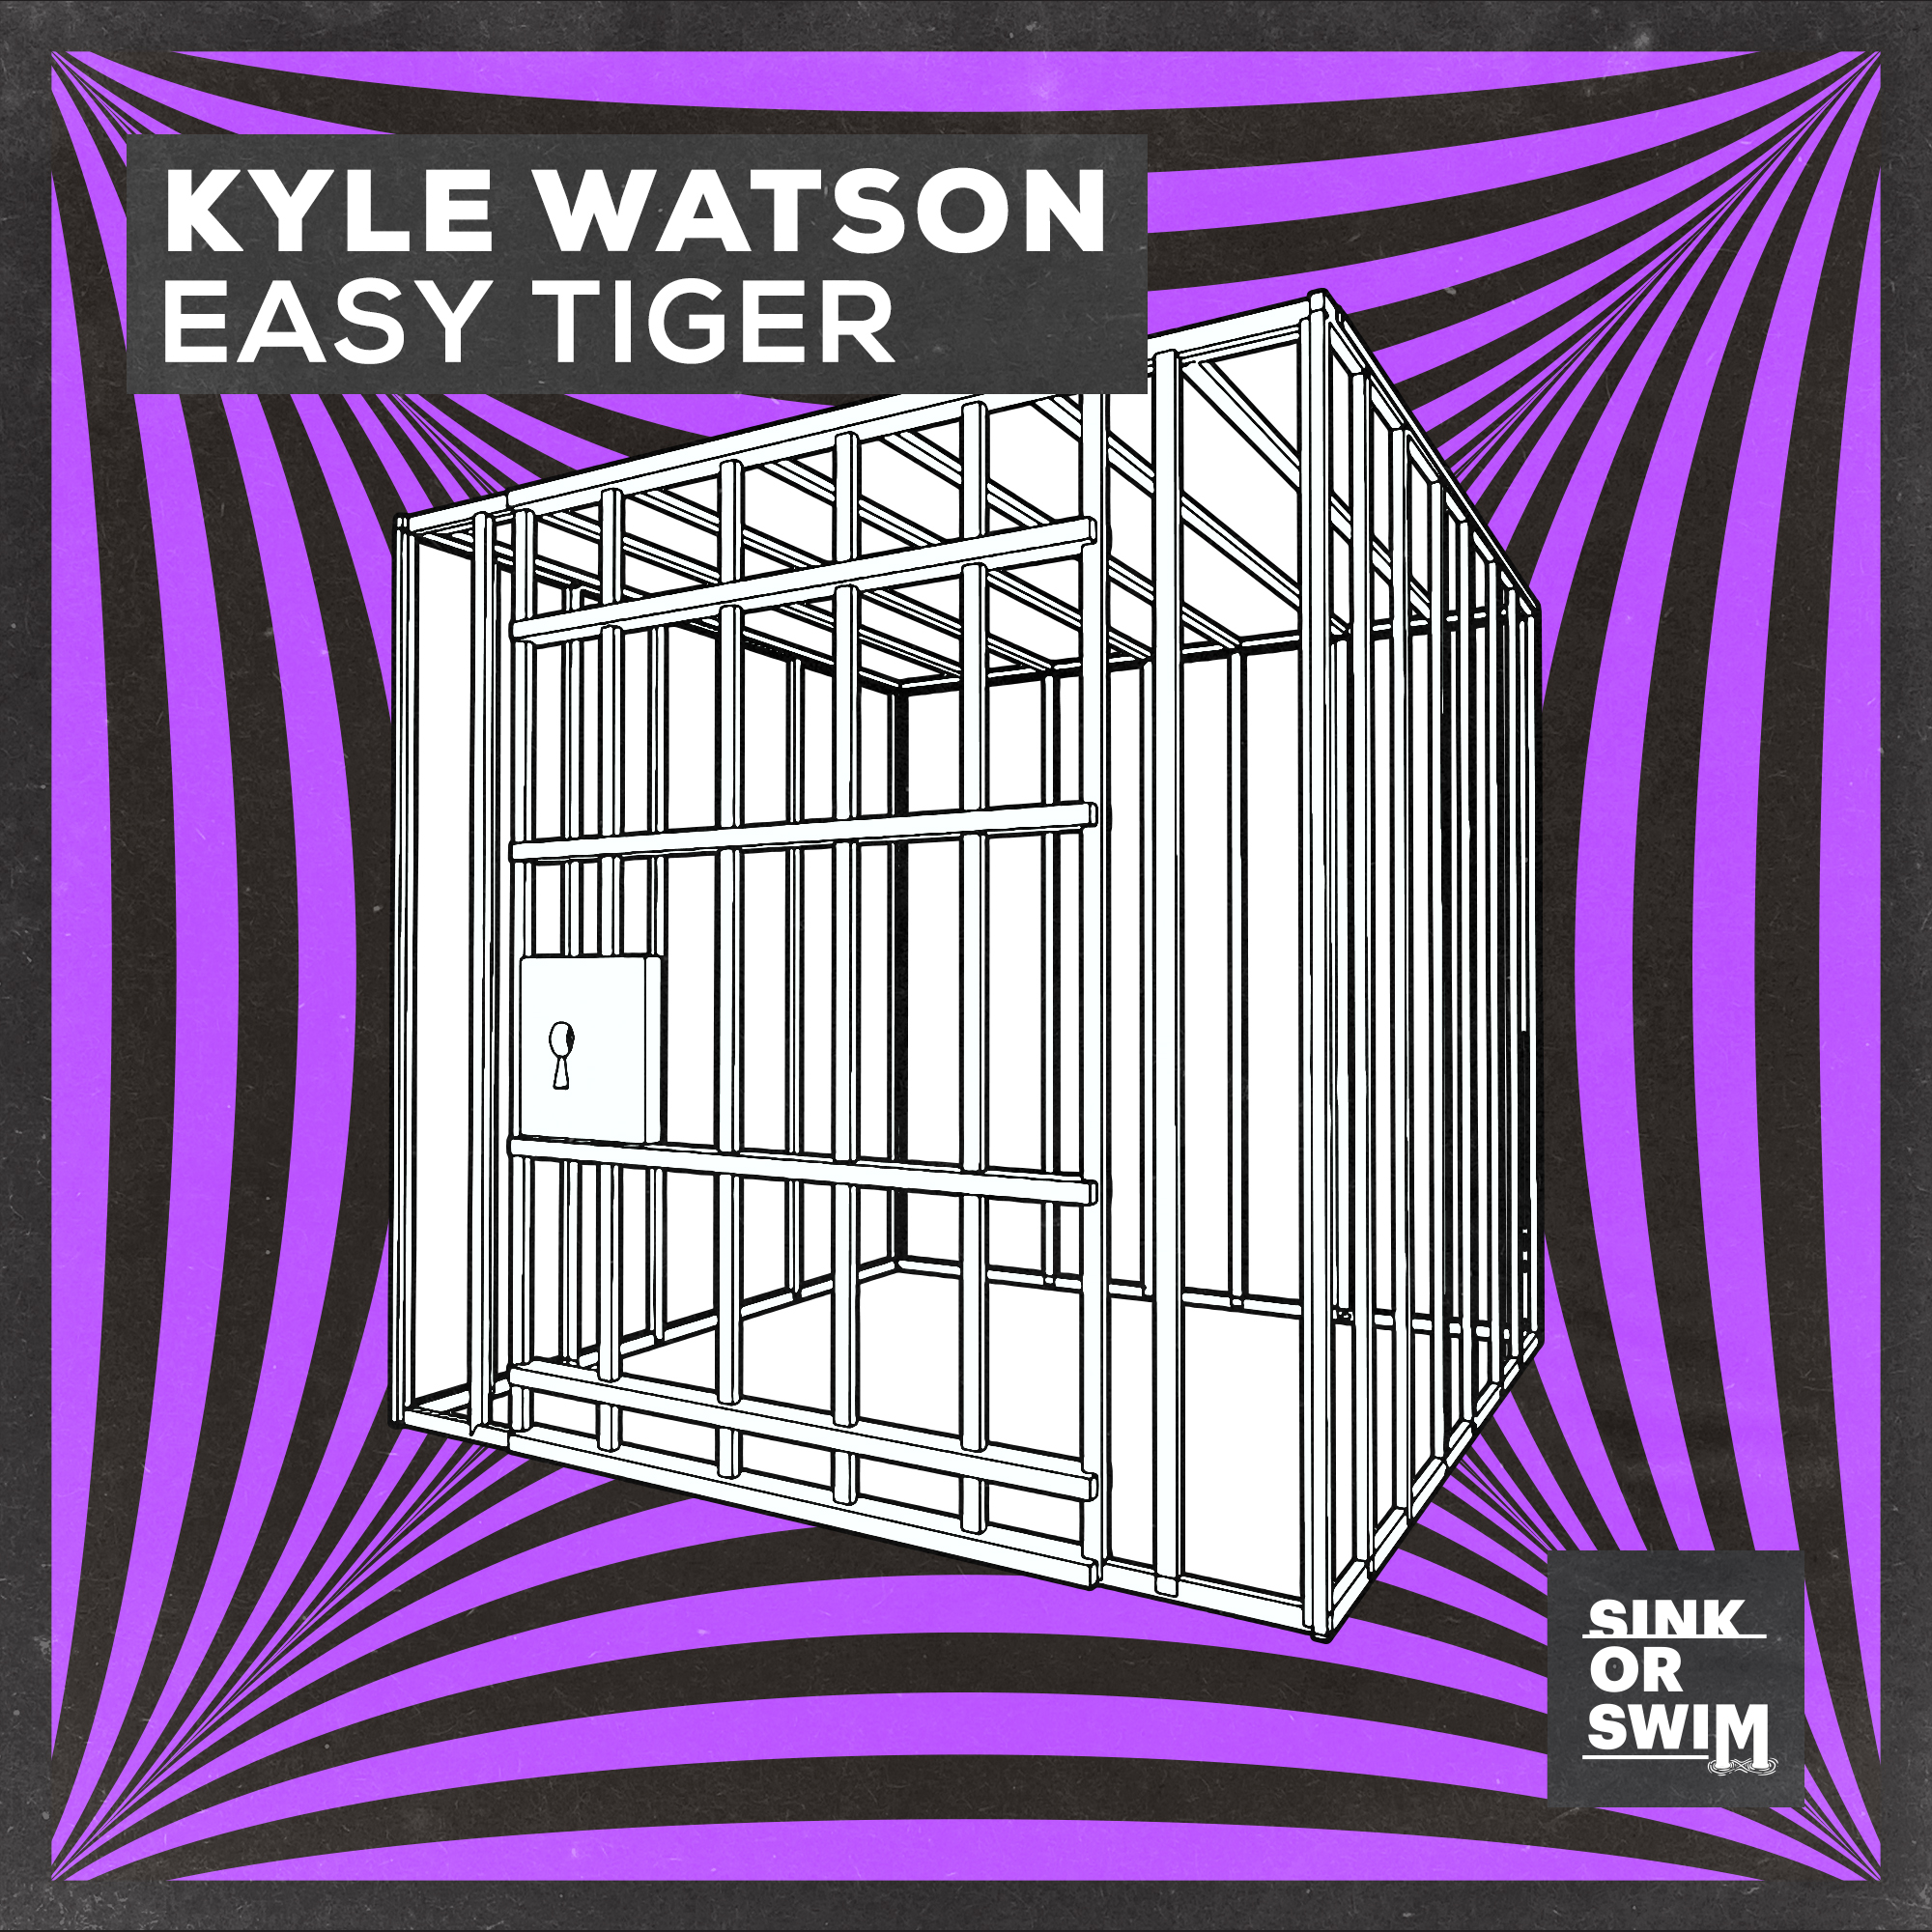 Kyle Watson - Easy Tiger, Sink or Swim